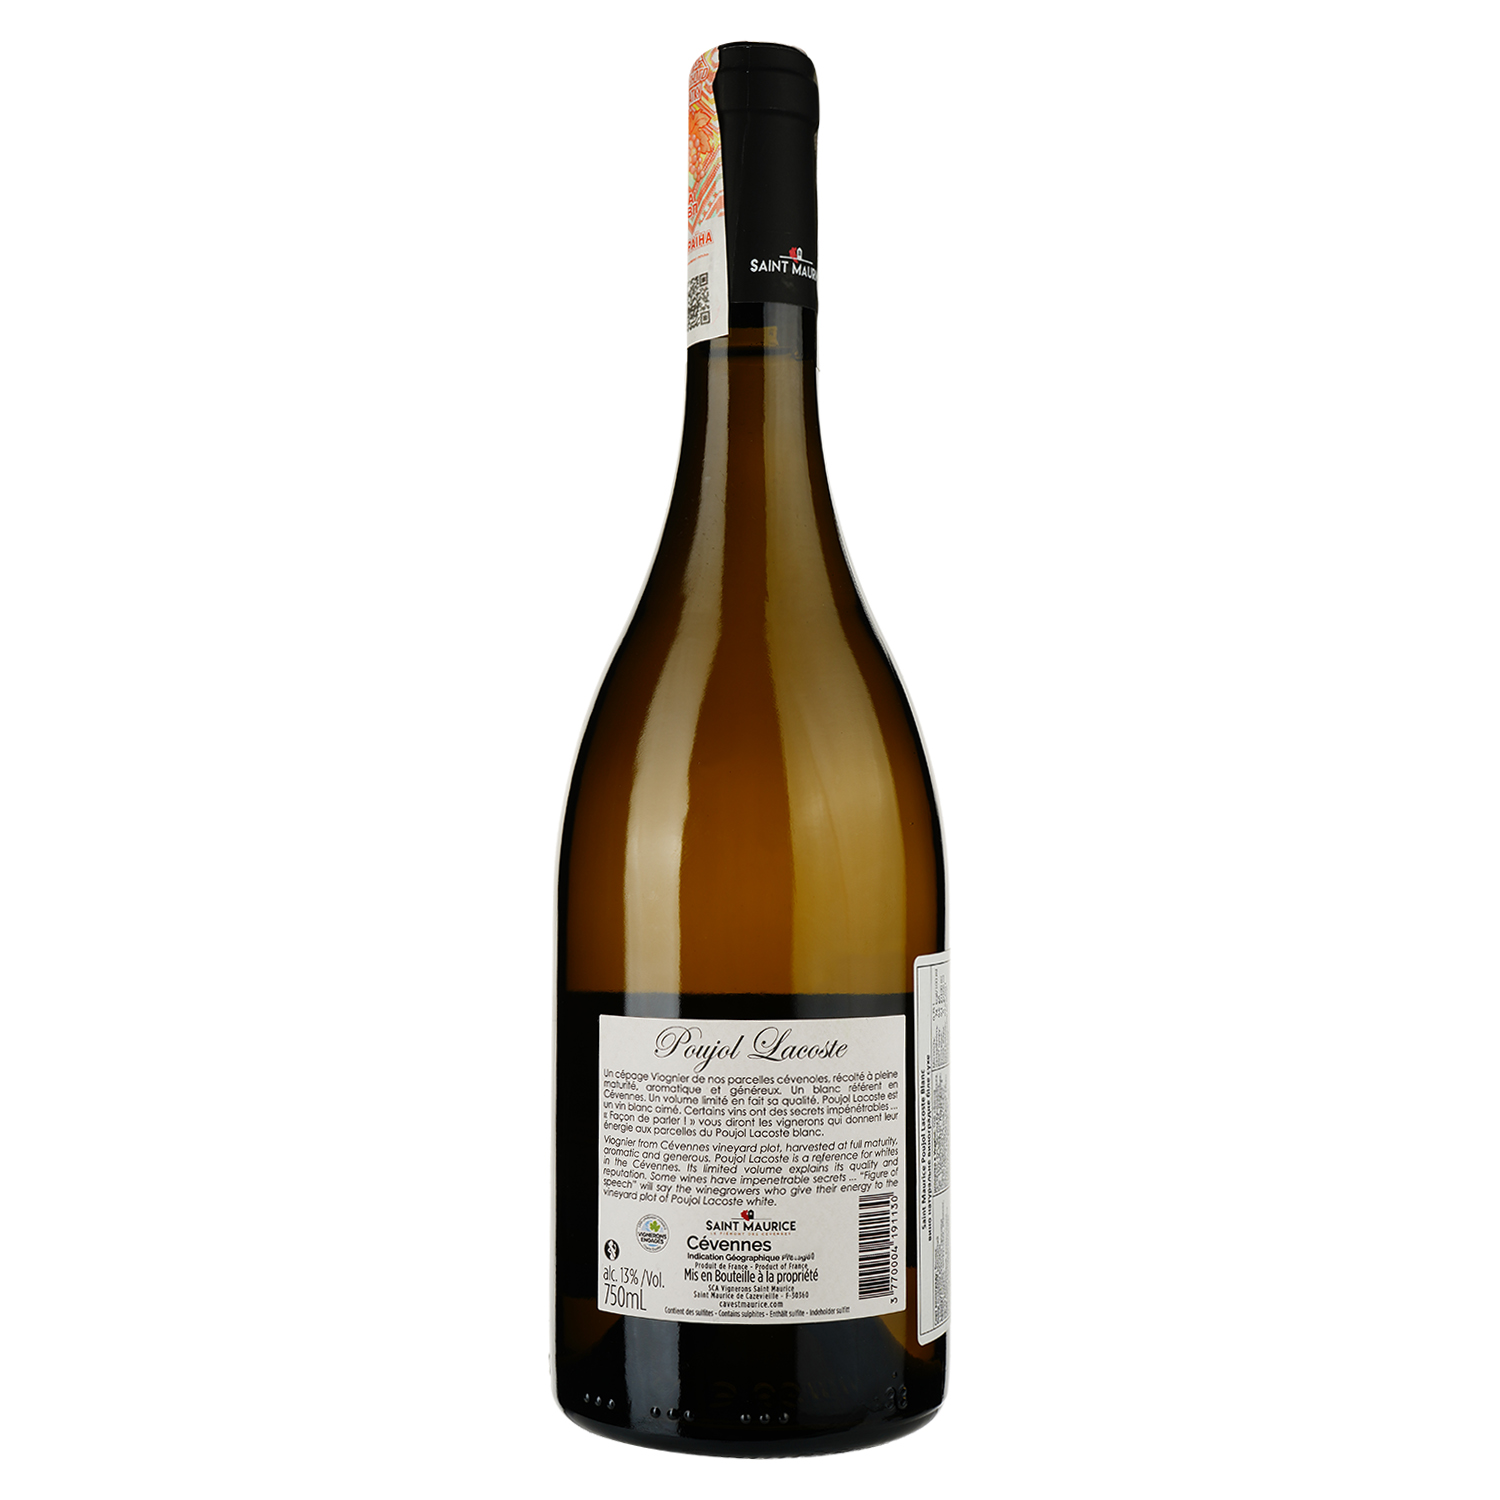 Вино Saint Maurice Poujol Lacoste IGP Cevennes blanc, vegan, белое, сухое, 0,75 л - фото 2